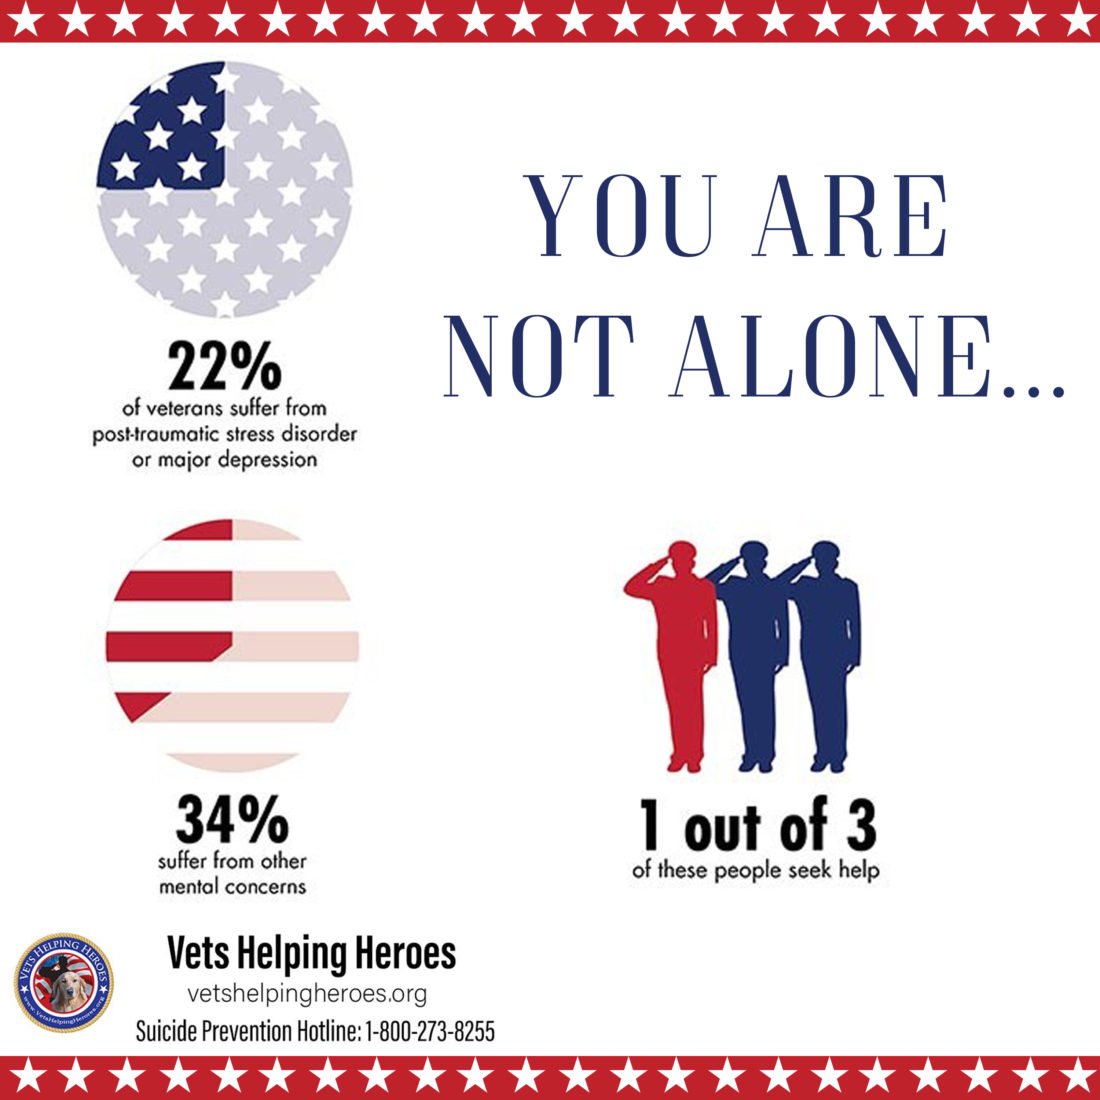 22% of Veterans suffer from PTSD or major depression